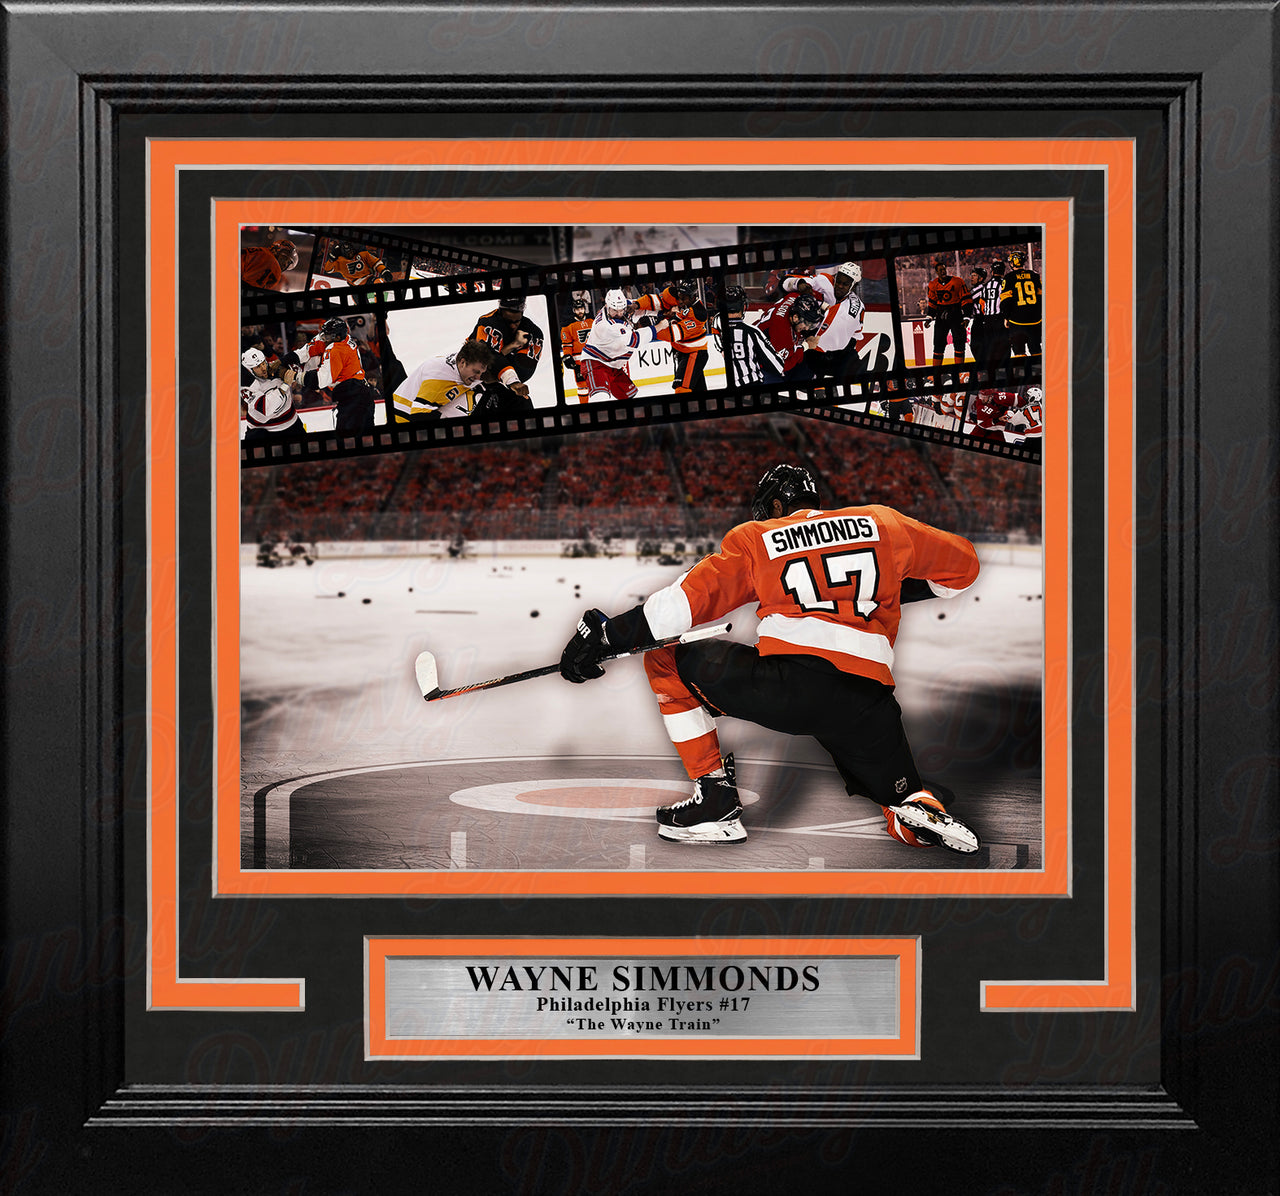 Wayne Simmonds Philadelphia Flyers 8" x 10" Framed Collage Hockey Photo